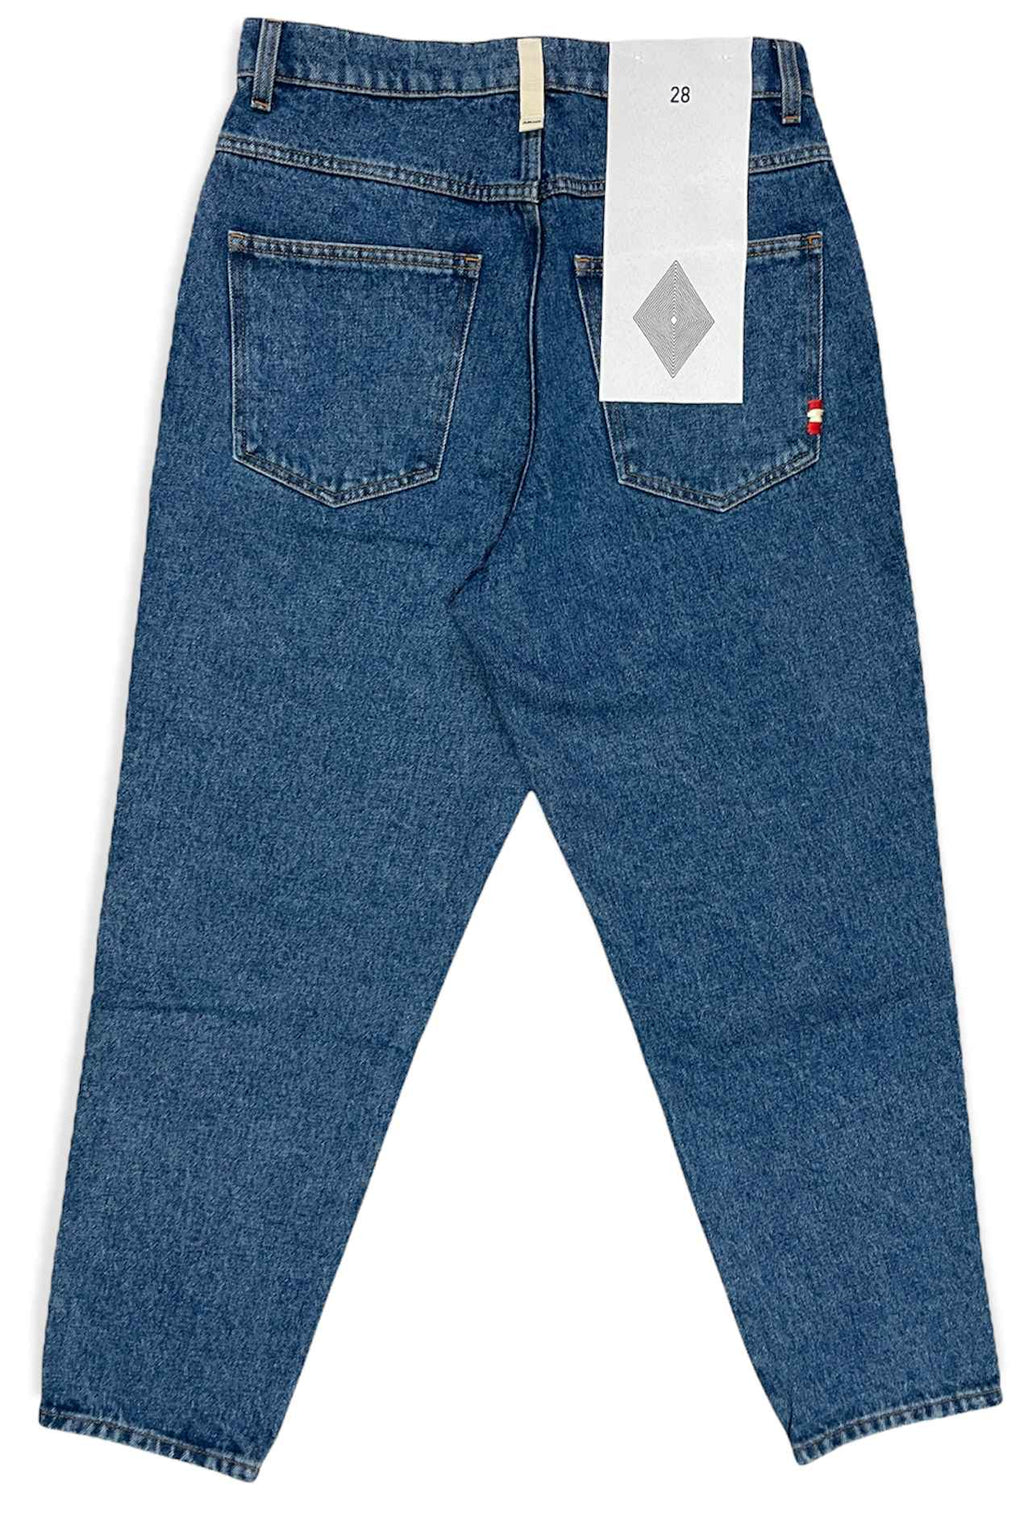  Amish Pantaloni Jeans Bernie Denim Stone Wash Blu Uomo - 2